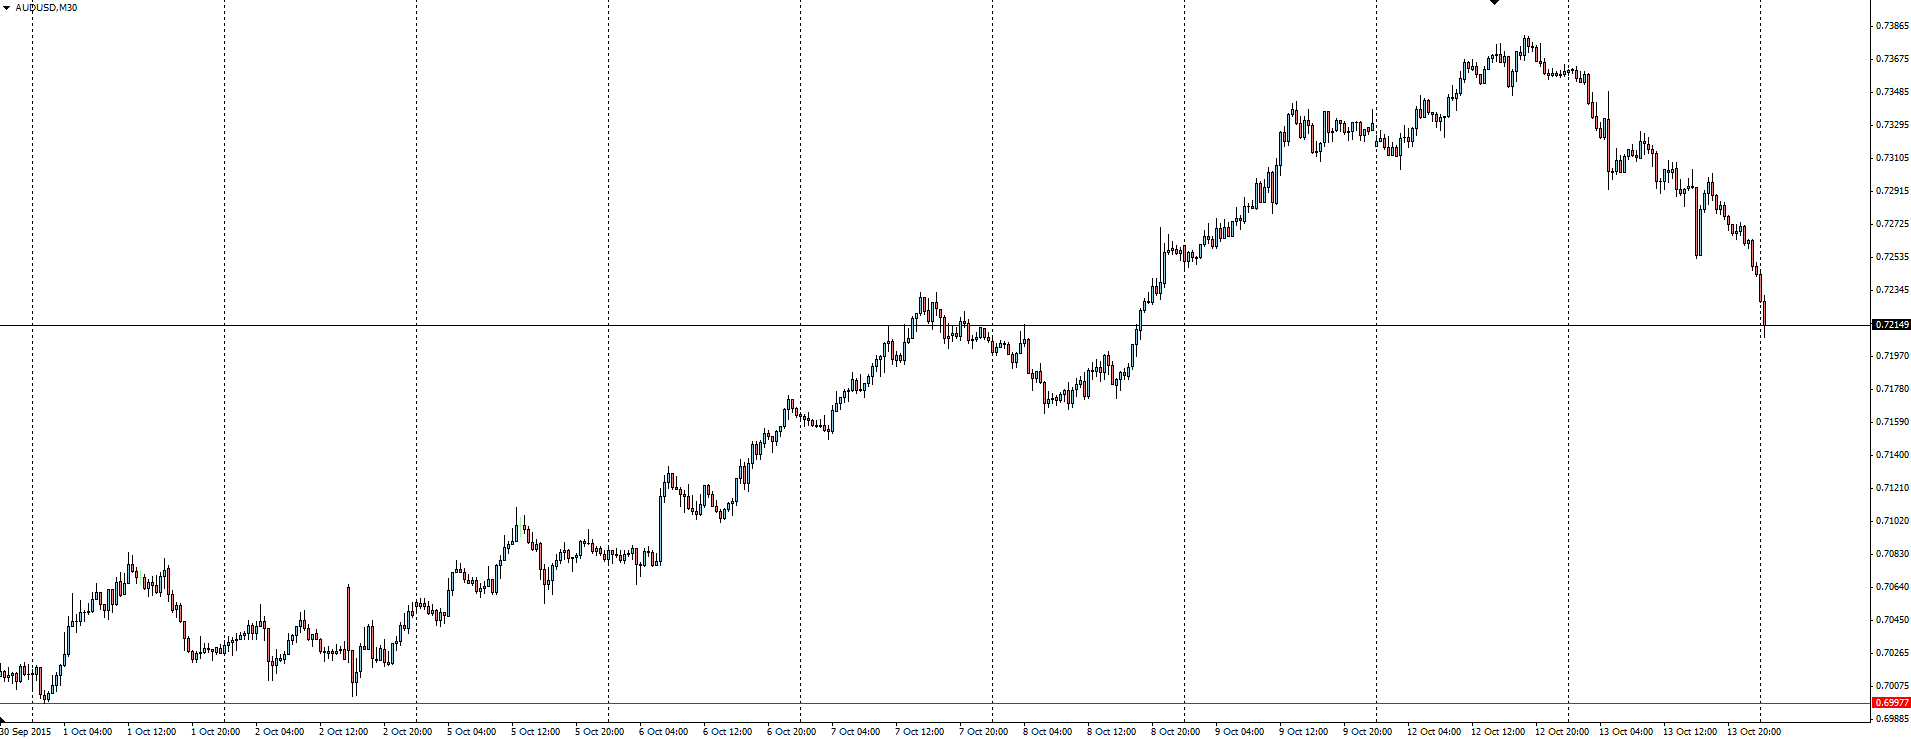 AUD/USD 30 Minute Chart